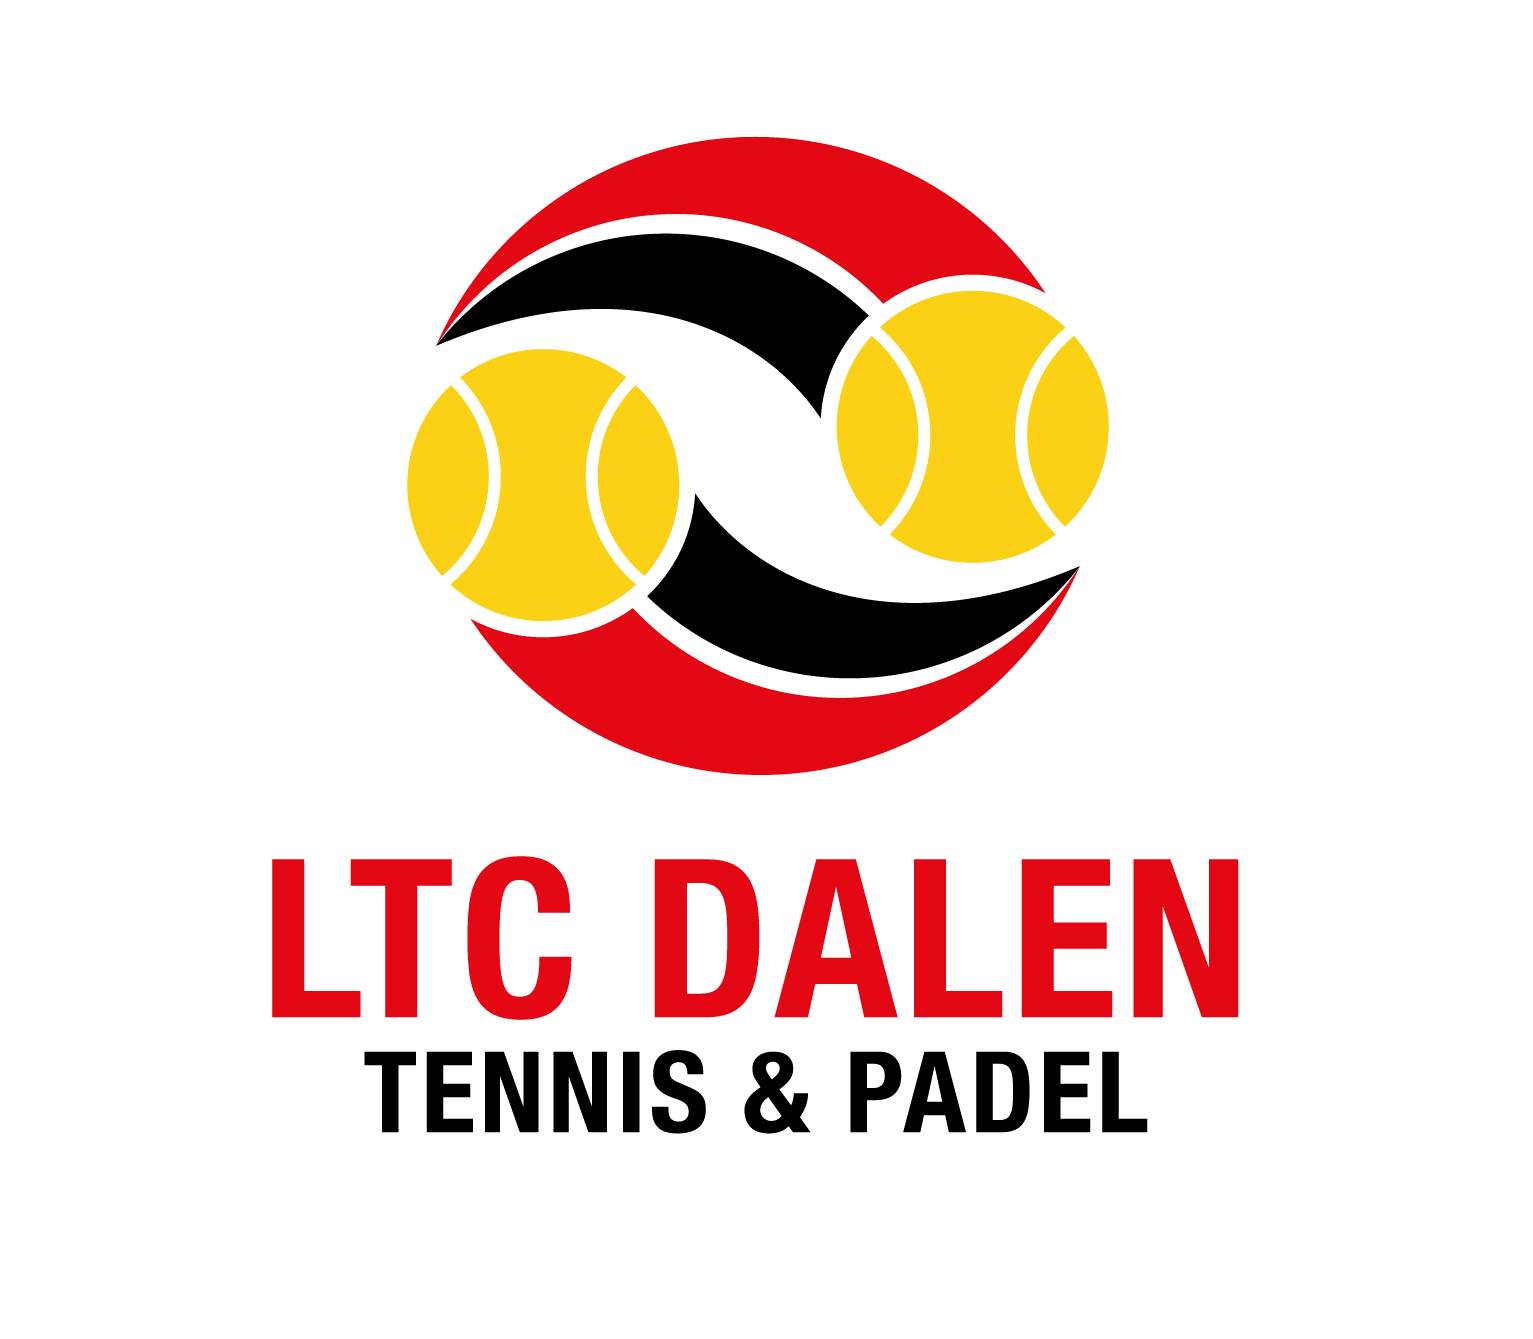 Profile image of venue LTC Dalen